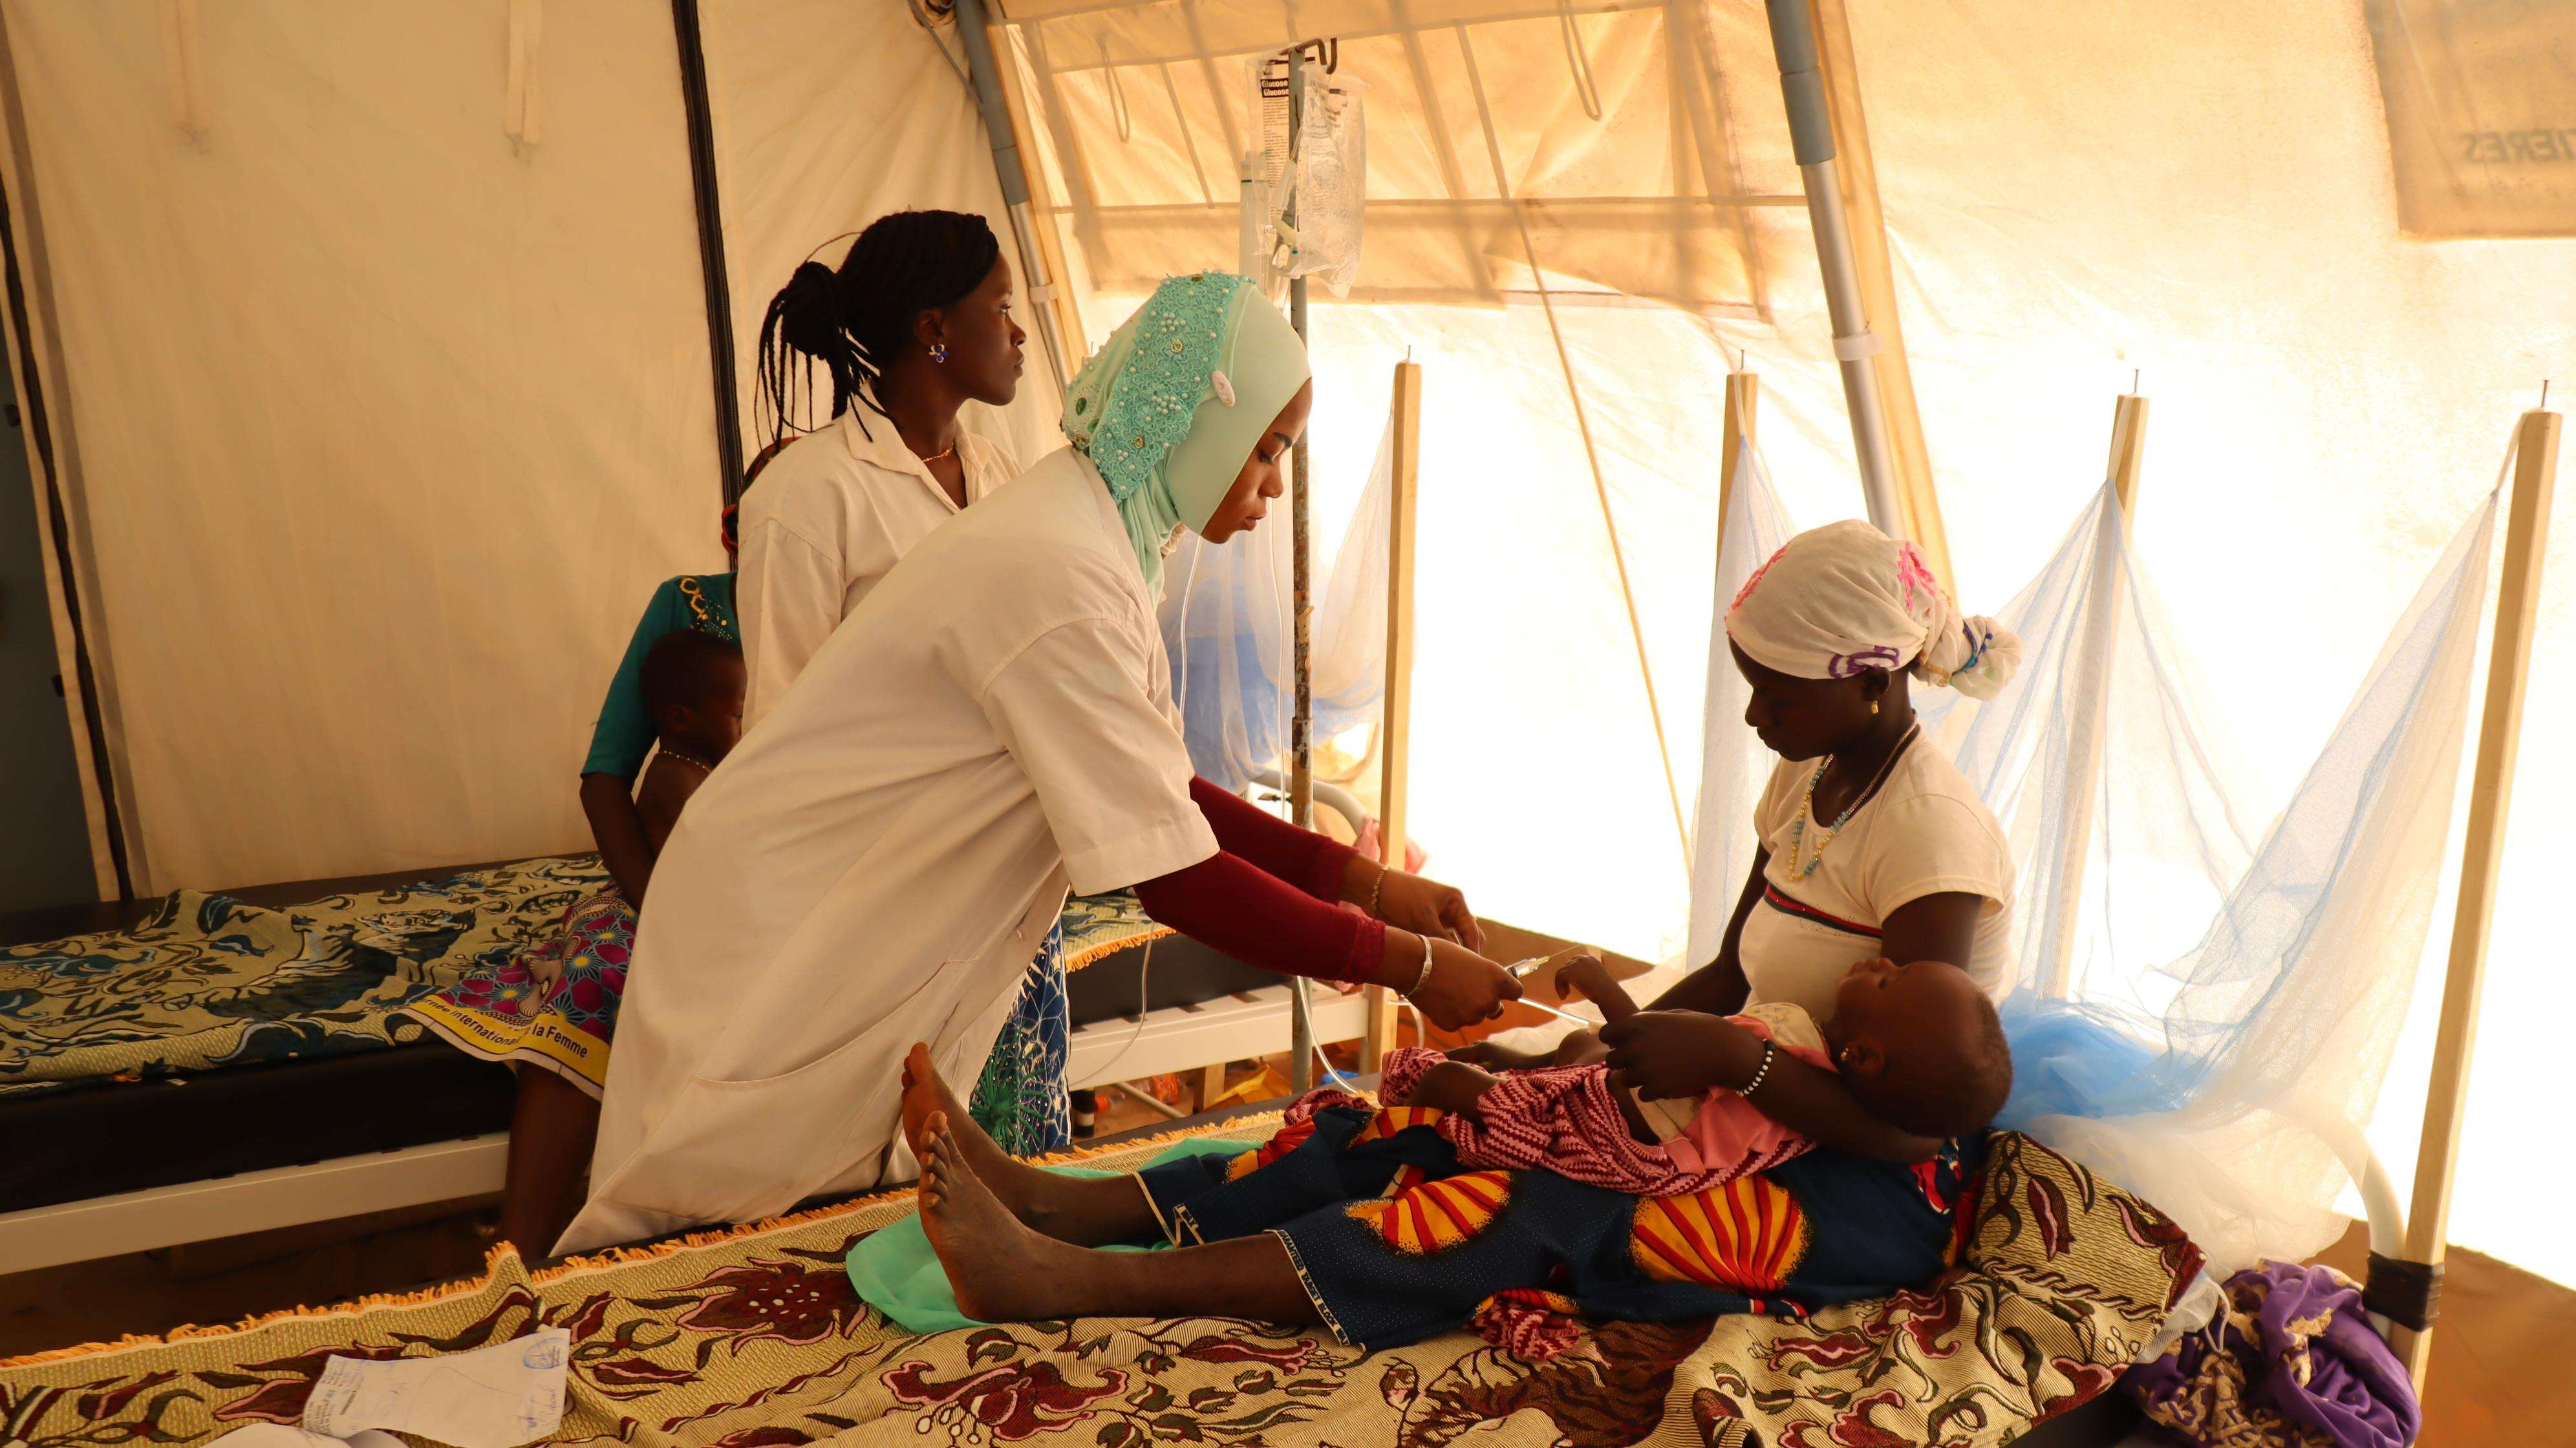 MSF activities in Titao, Burkina Faso in February 2020